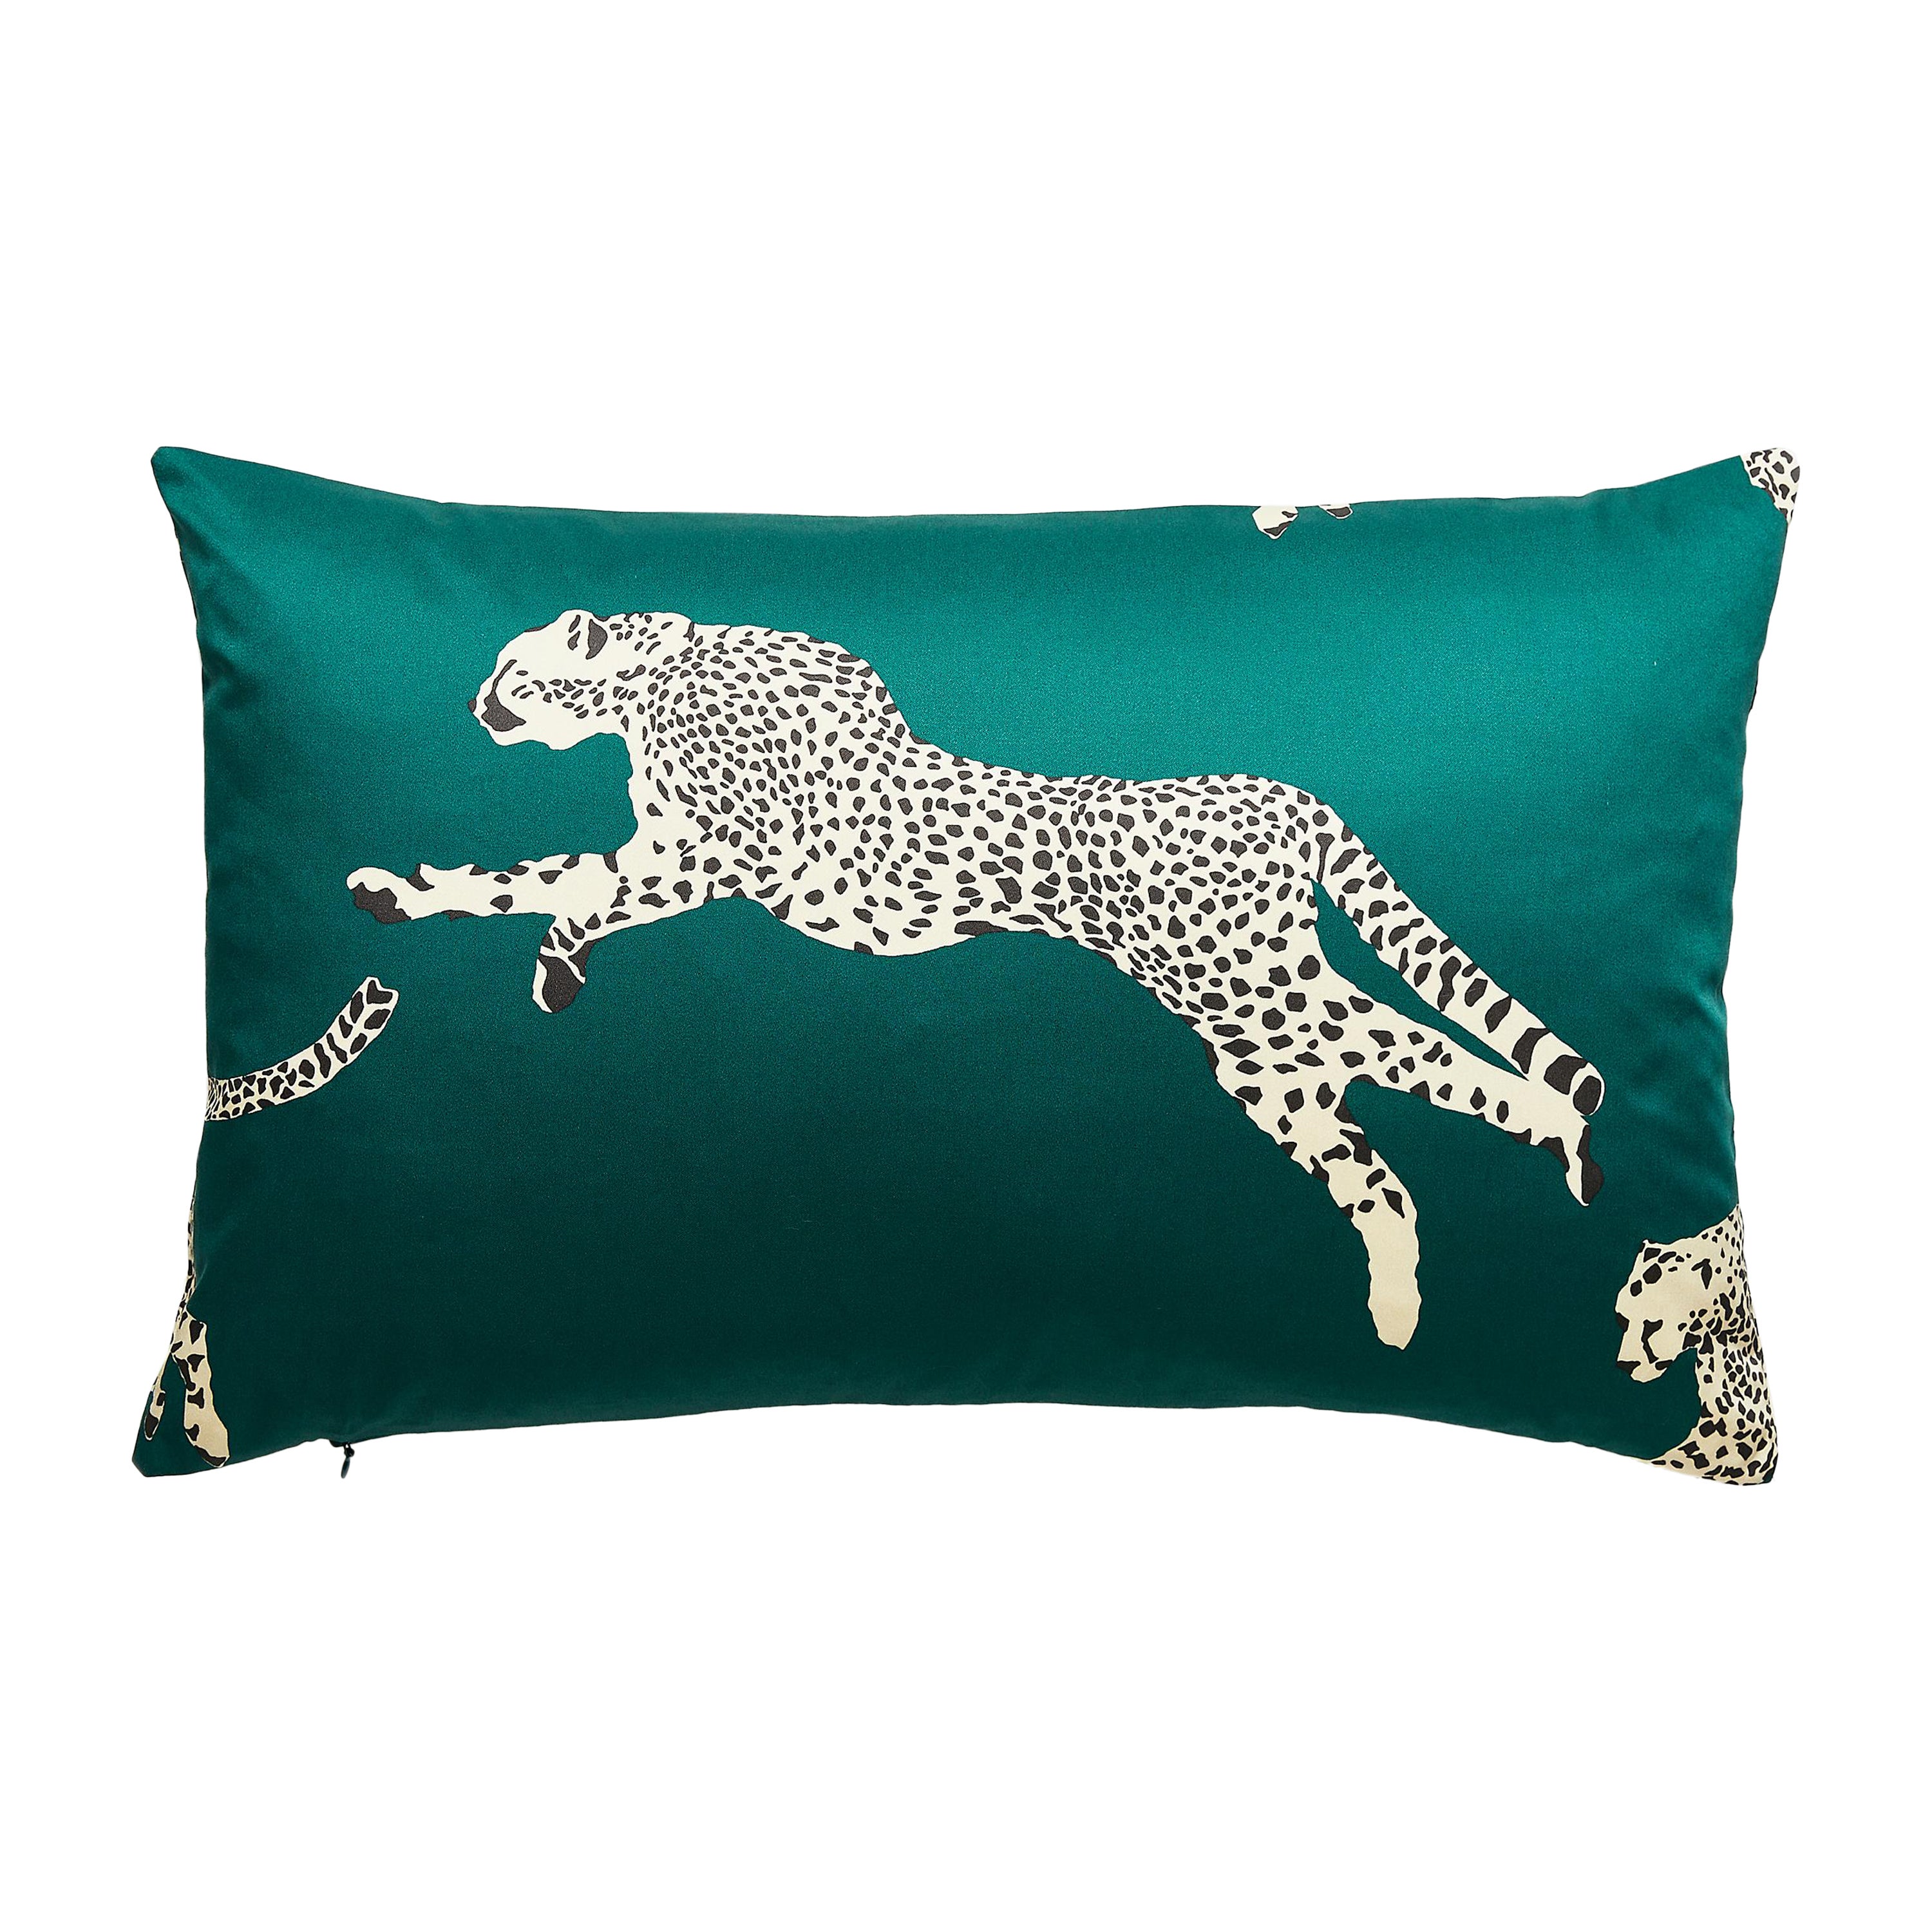 Leaping Cheetah Lumbar Pillow For Sale